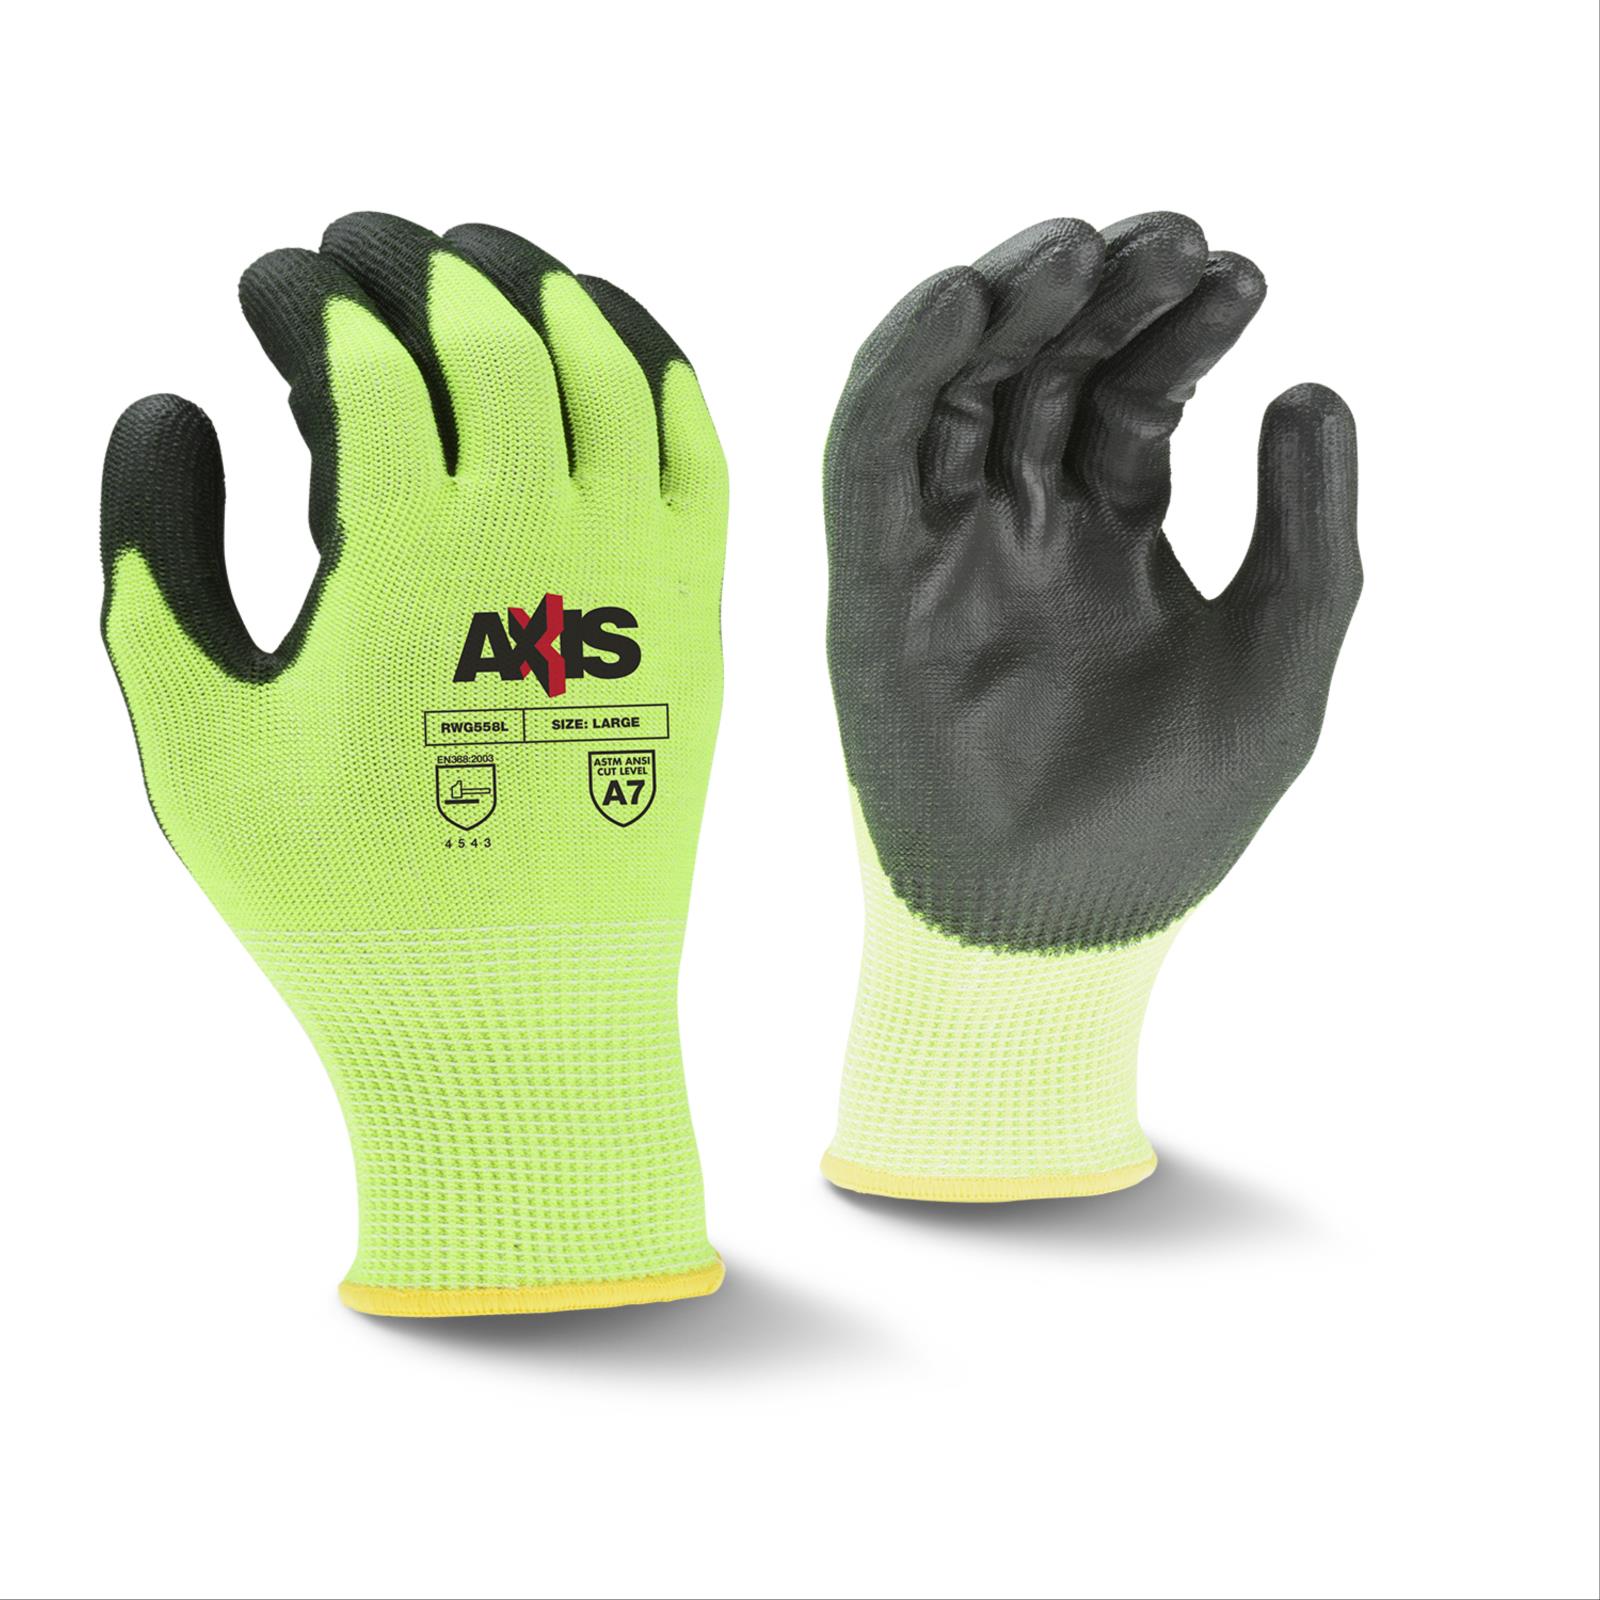 AXIS™ PU Coated Hi-Viz Gloves, Cut Level A8